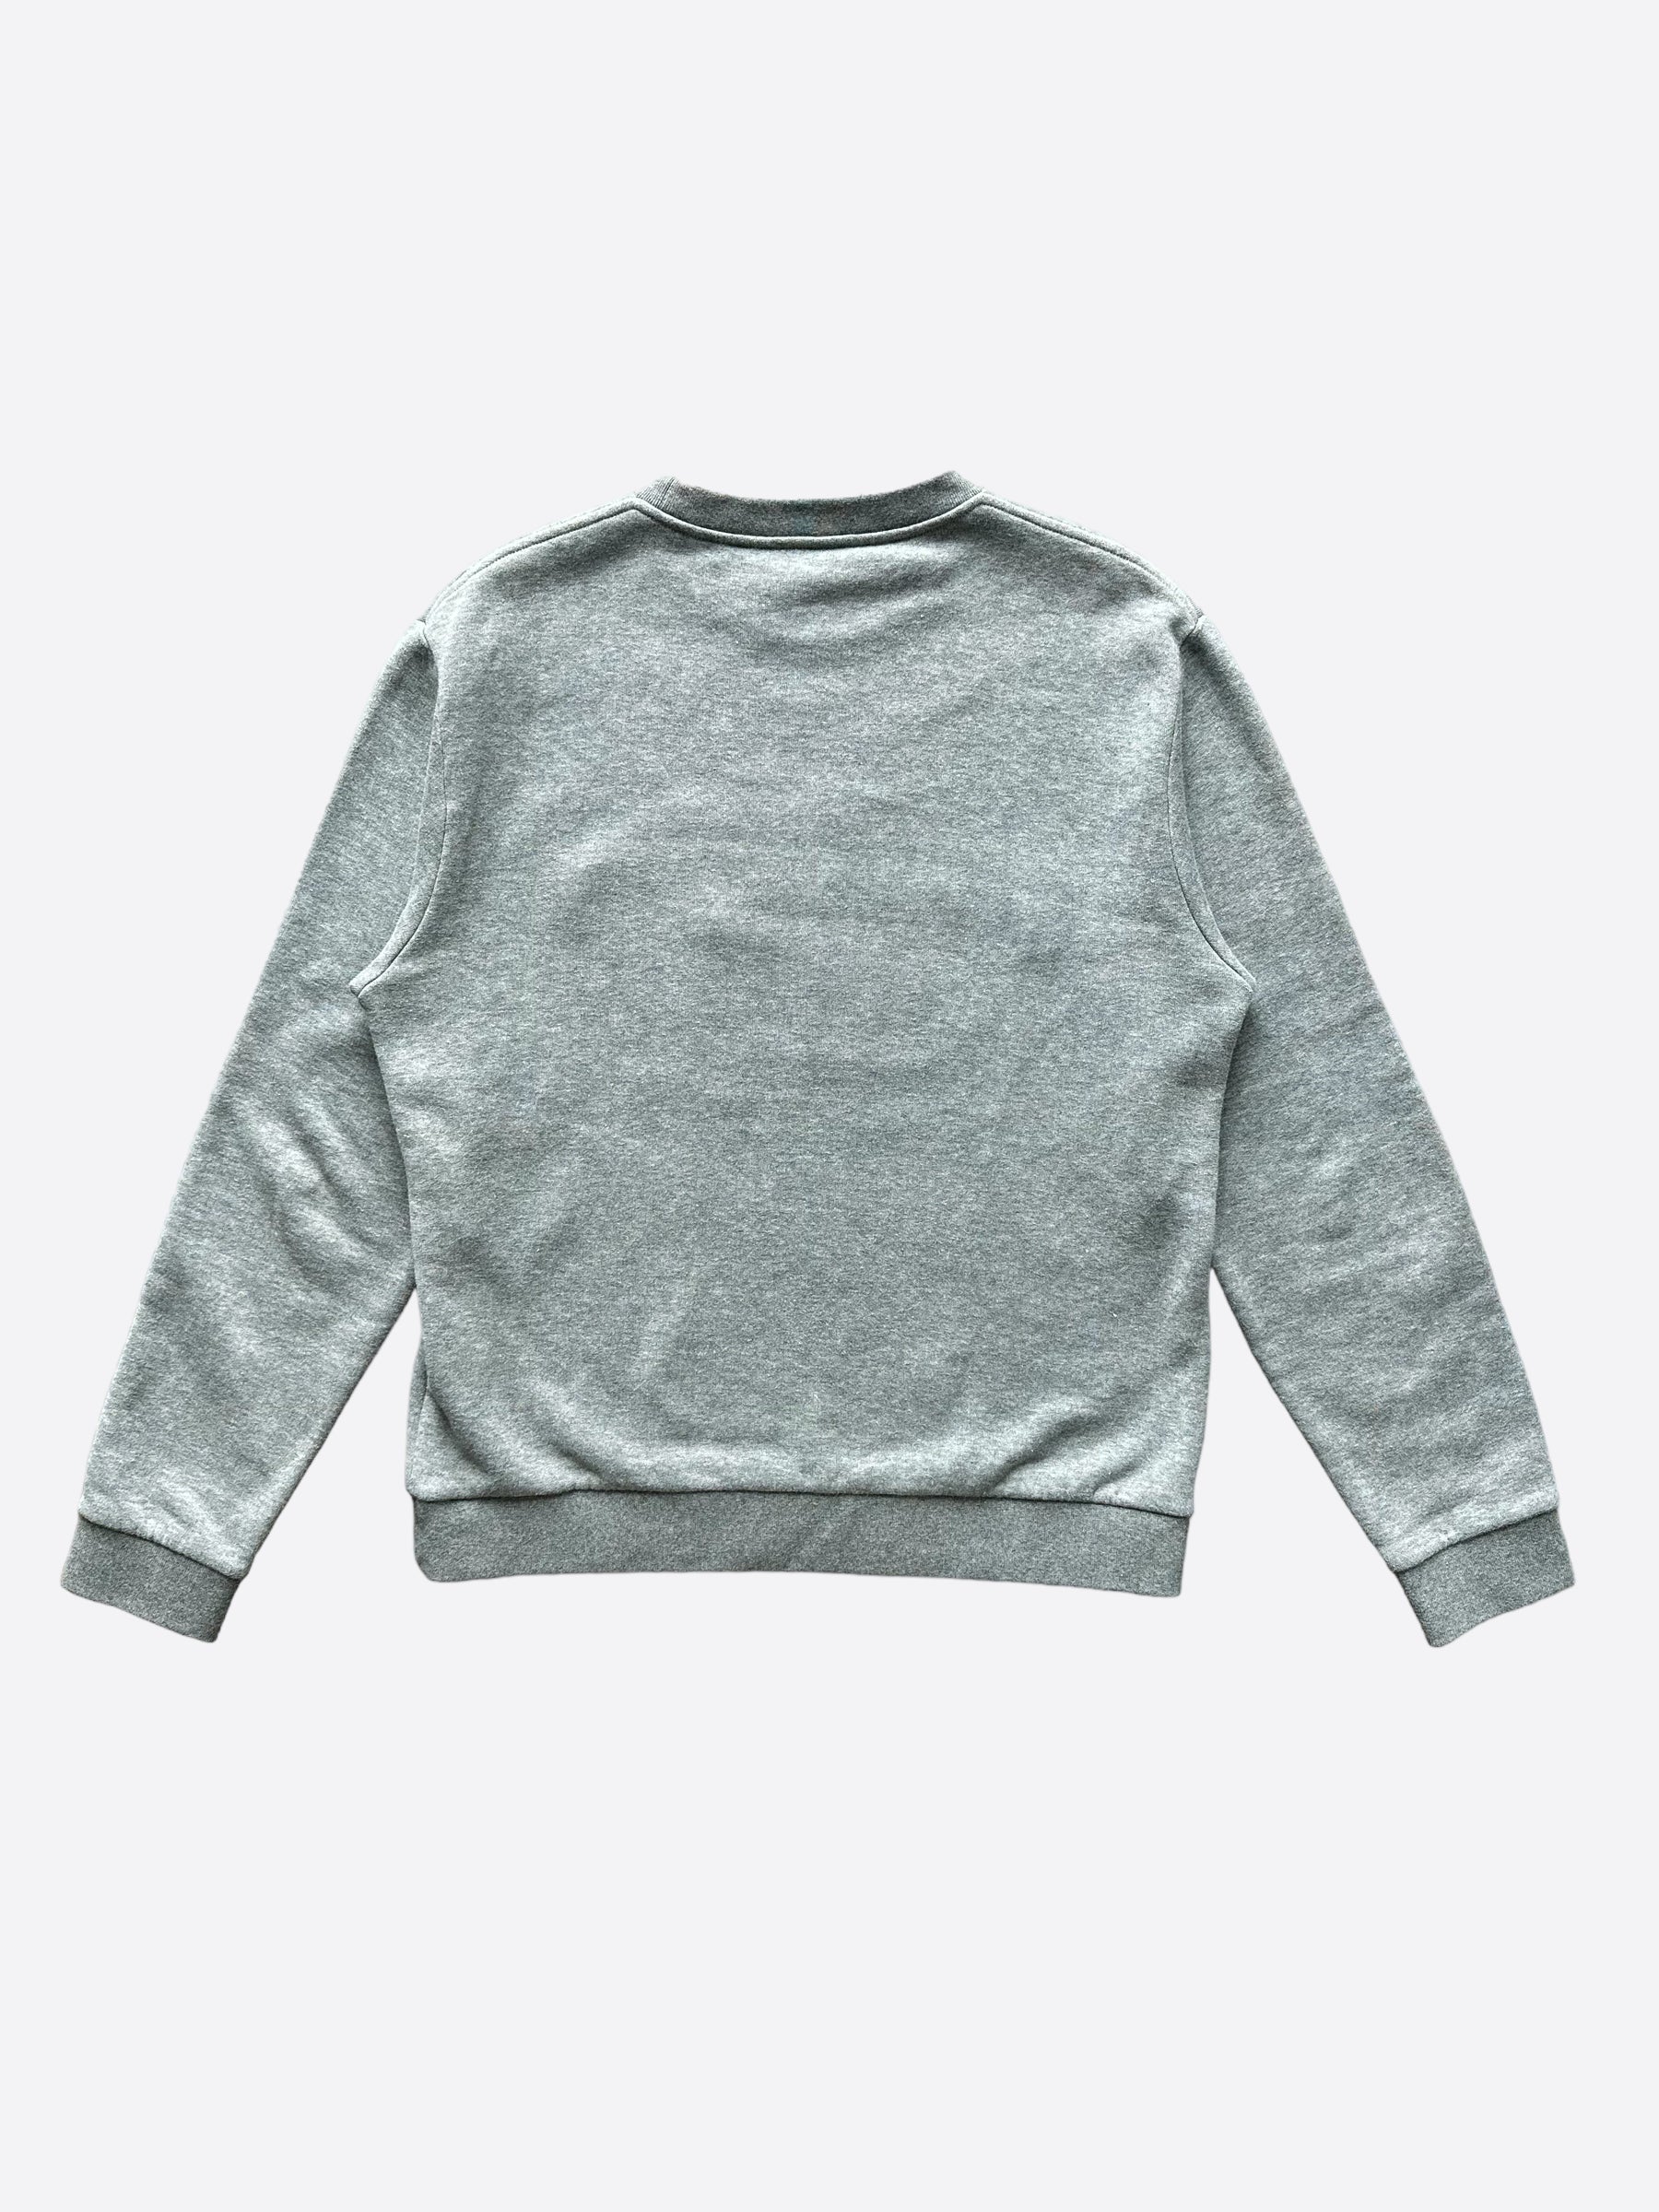 louis vuitton sweater logo